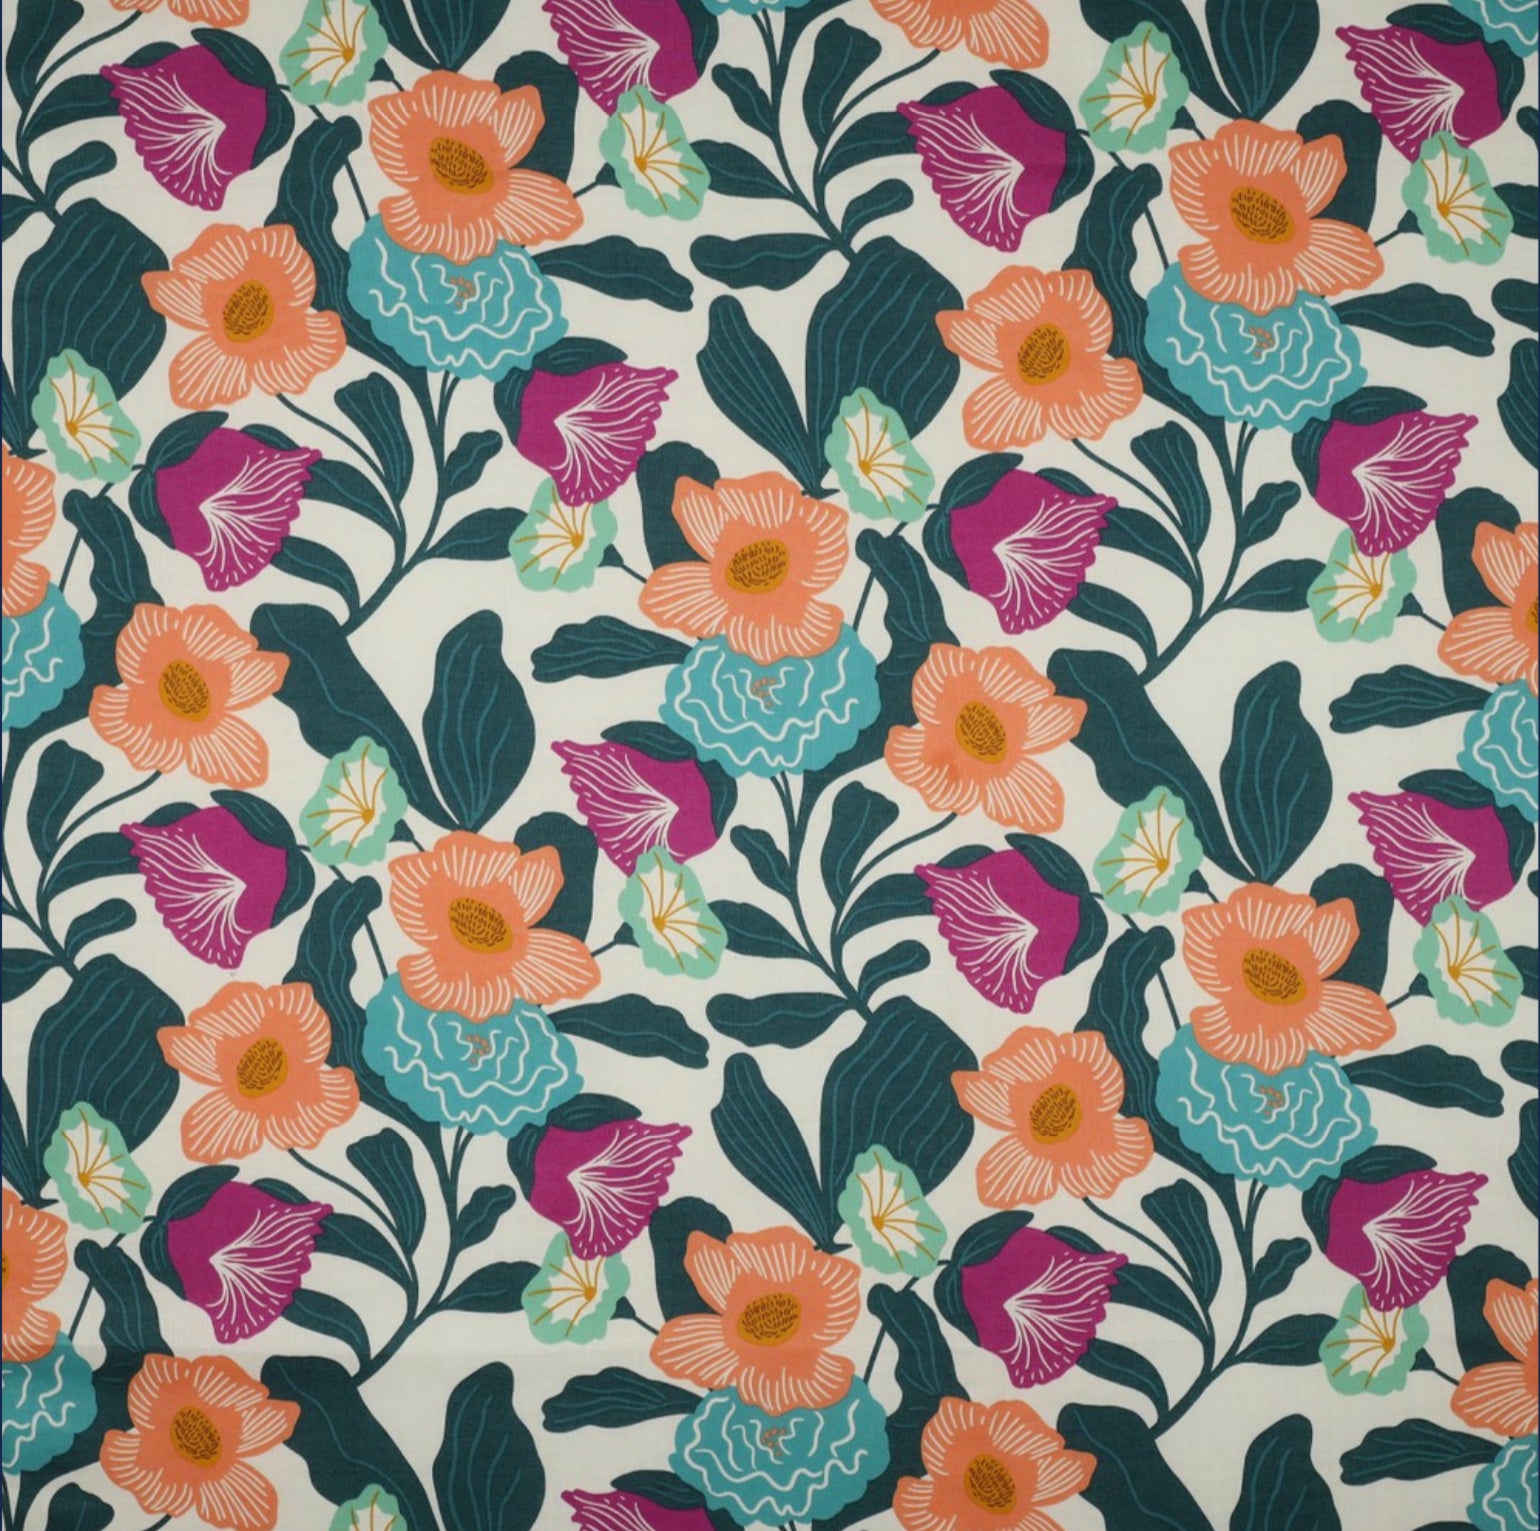 REMNANT 1.62 Metres - Nerida Hansen - London floral Ecru Cotton Voile Fabric